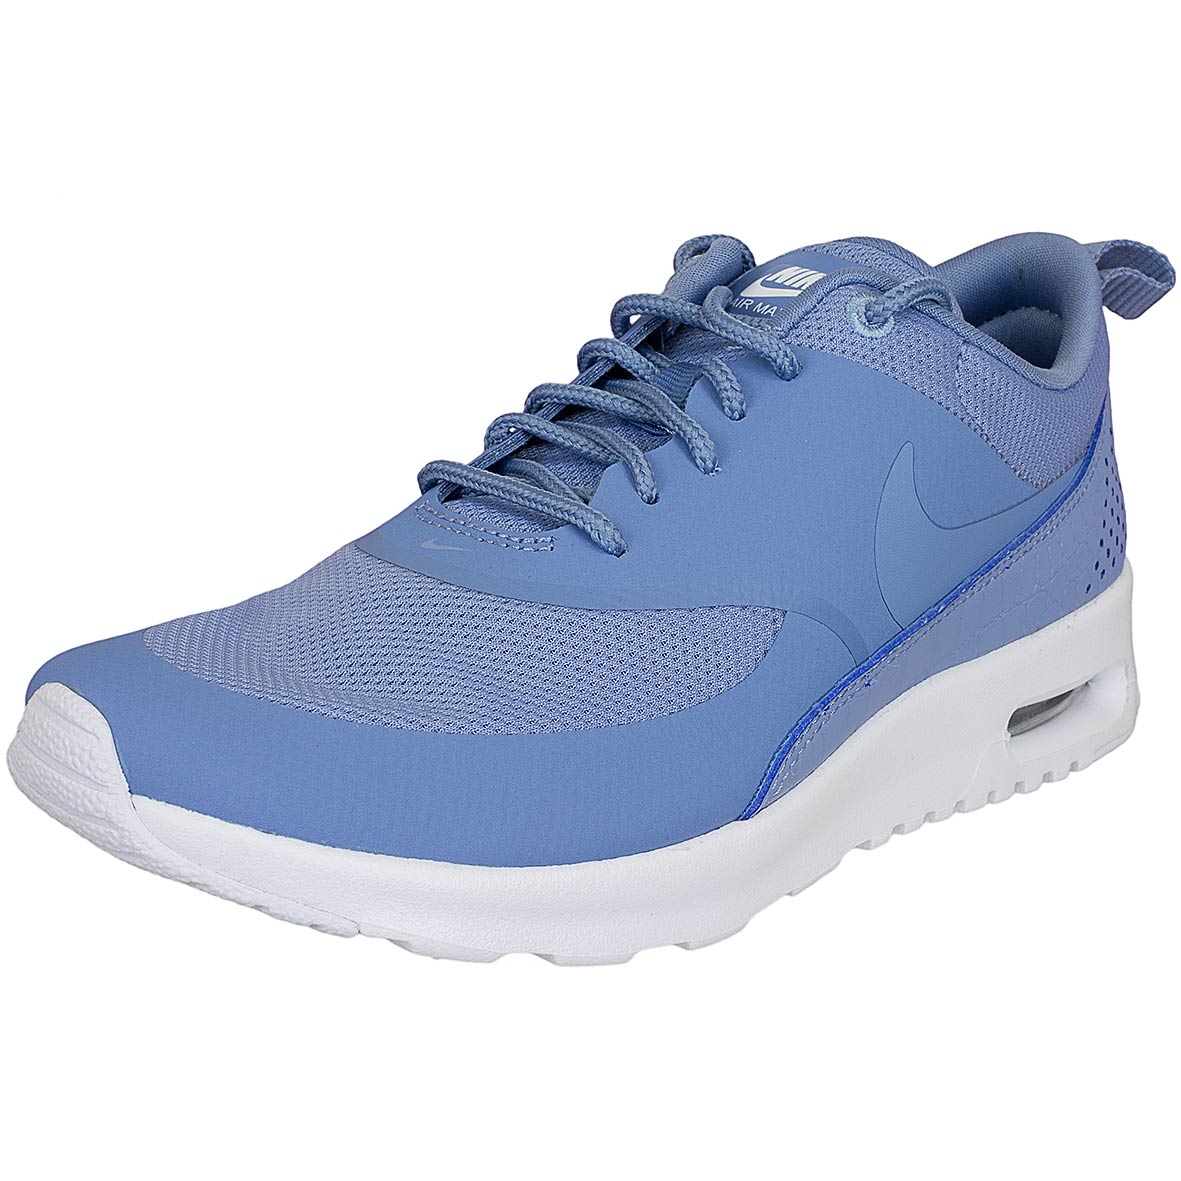 ☆ Nike Damen Sneaker Air Max Thea blau - hier bestellen!